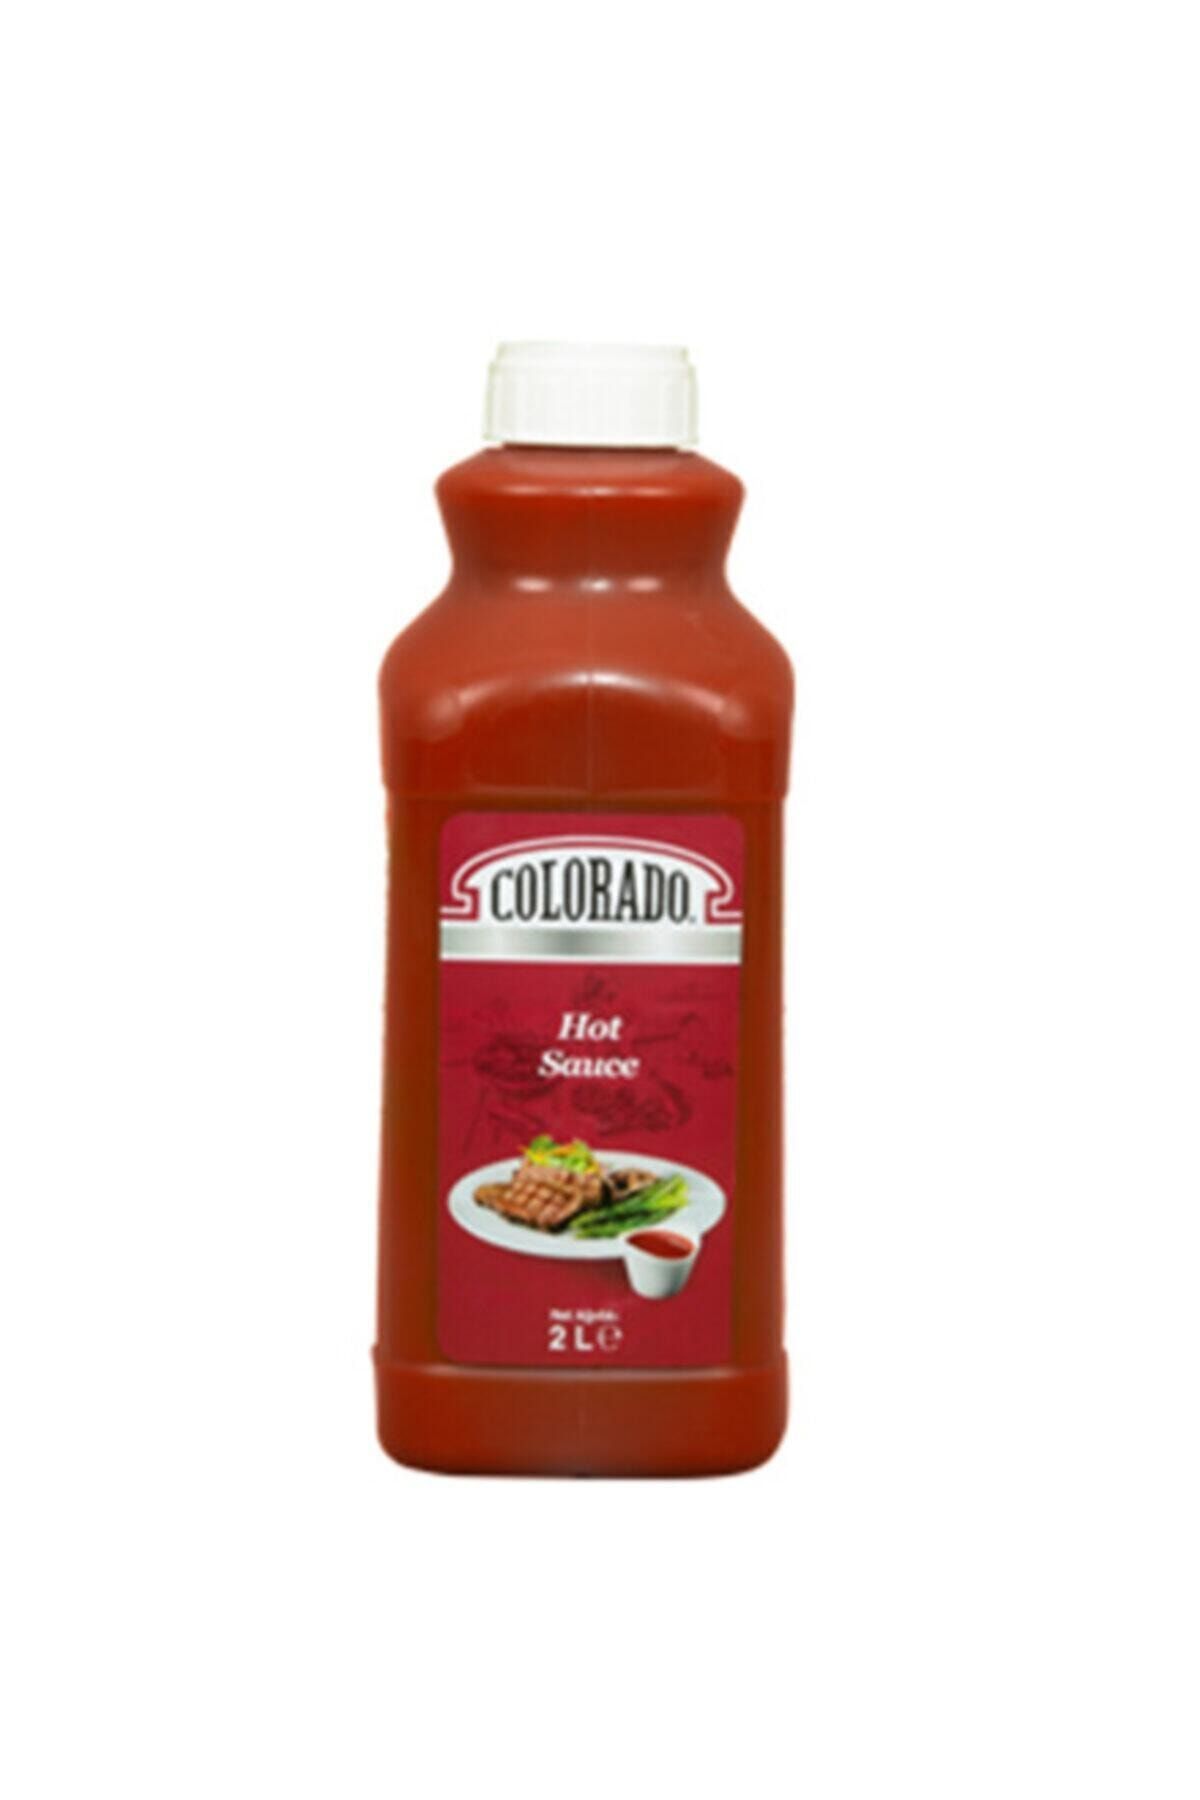 Colorado Hot Sauce 2 Lt